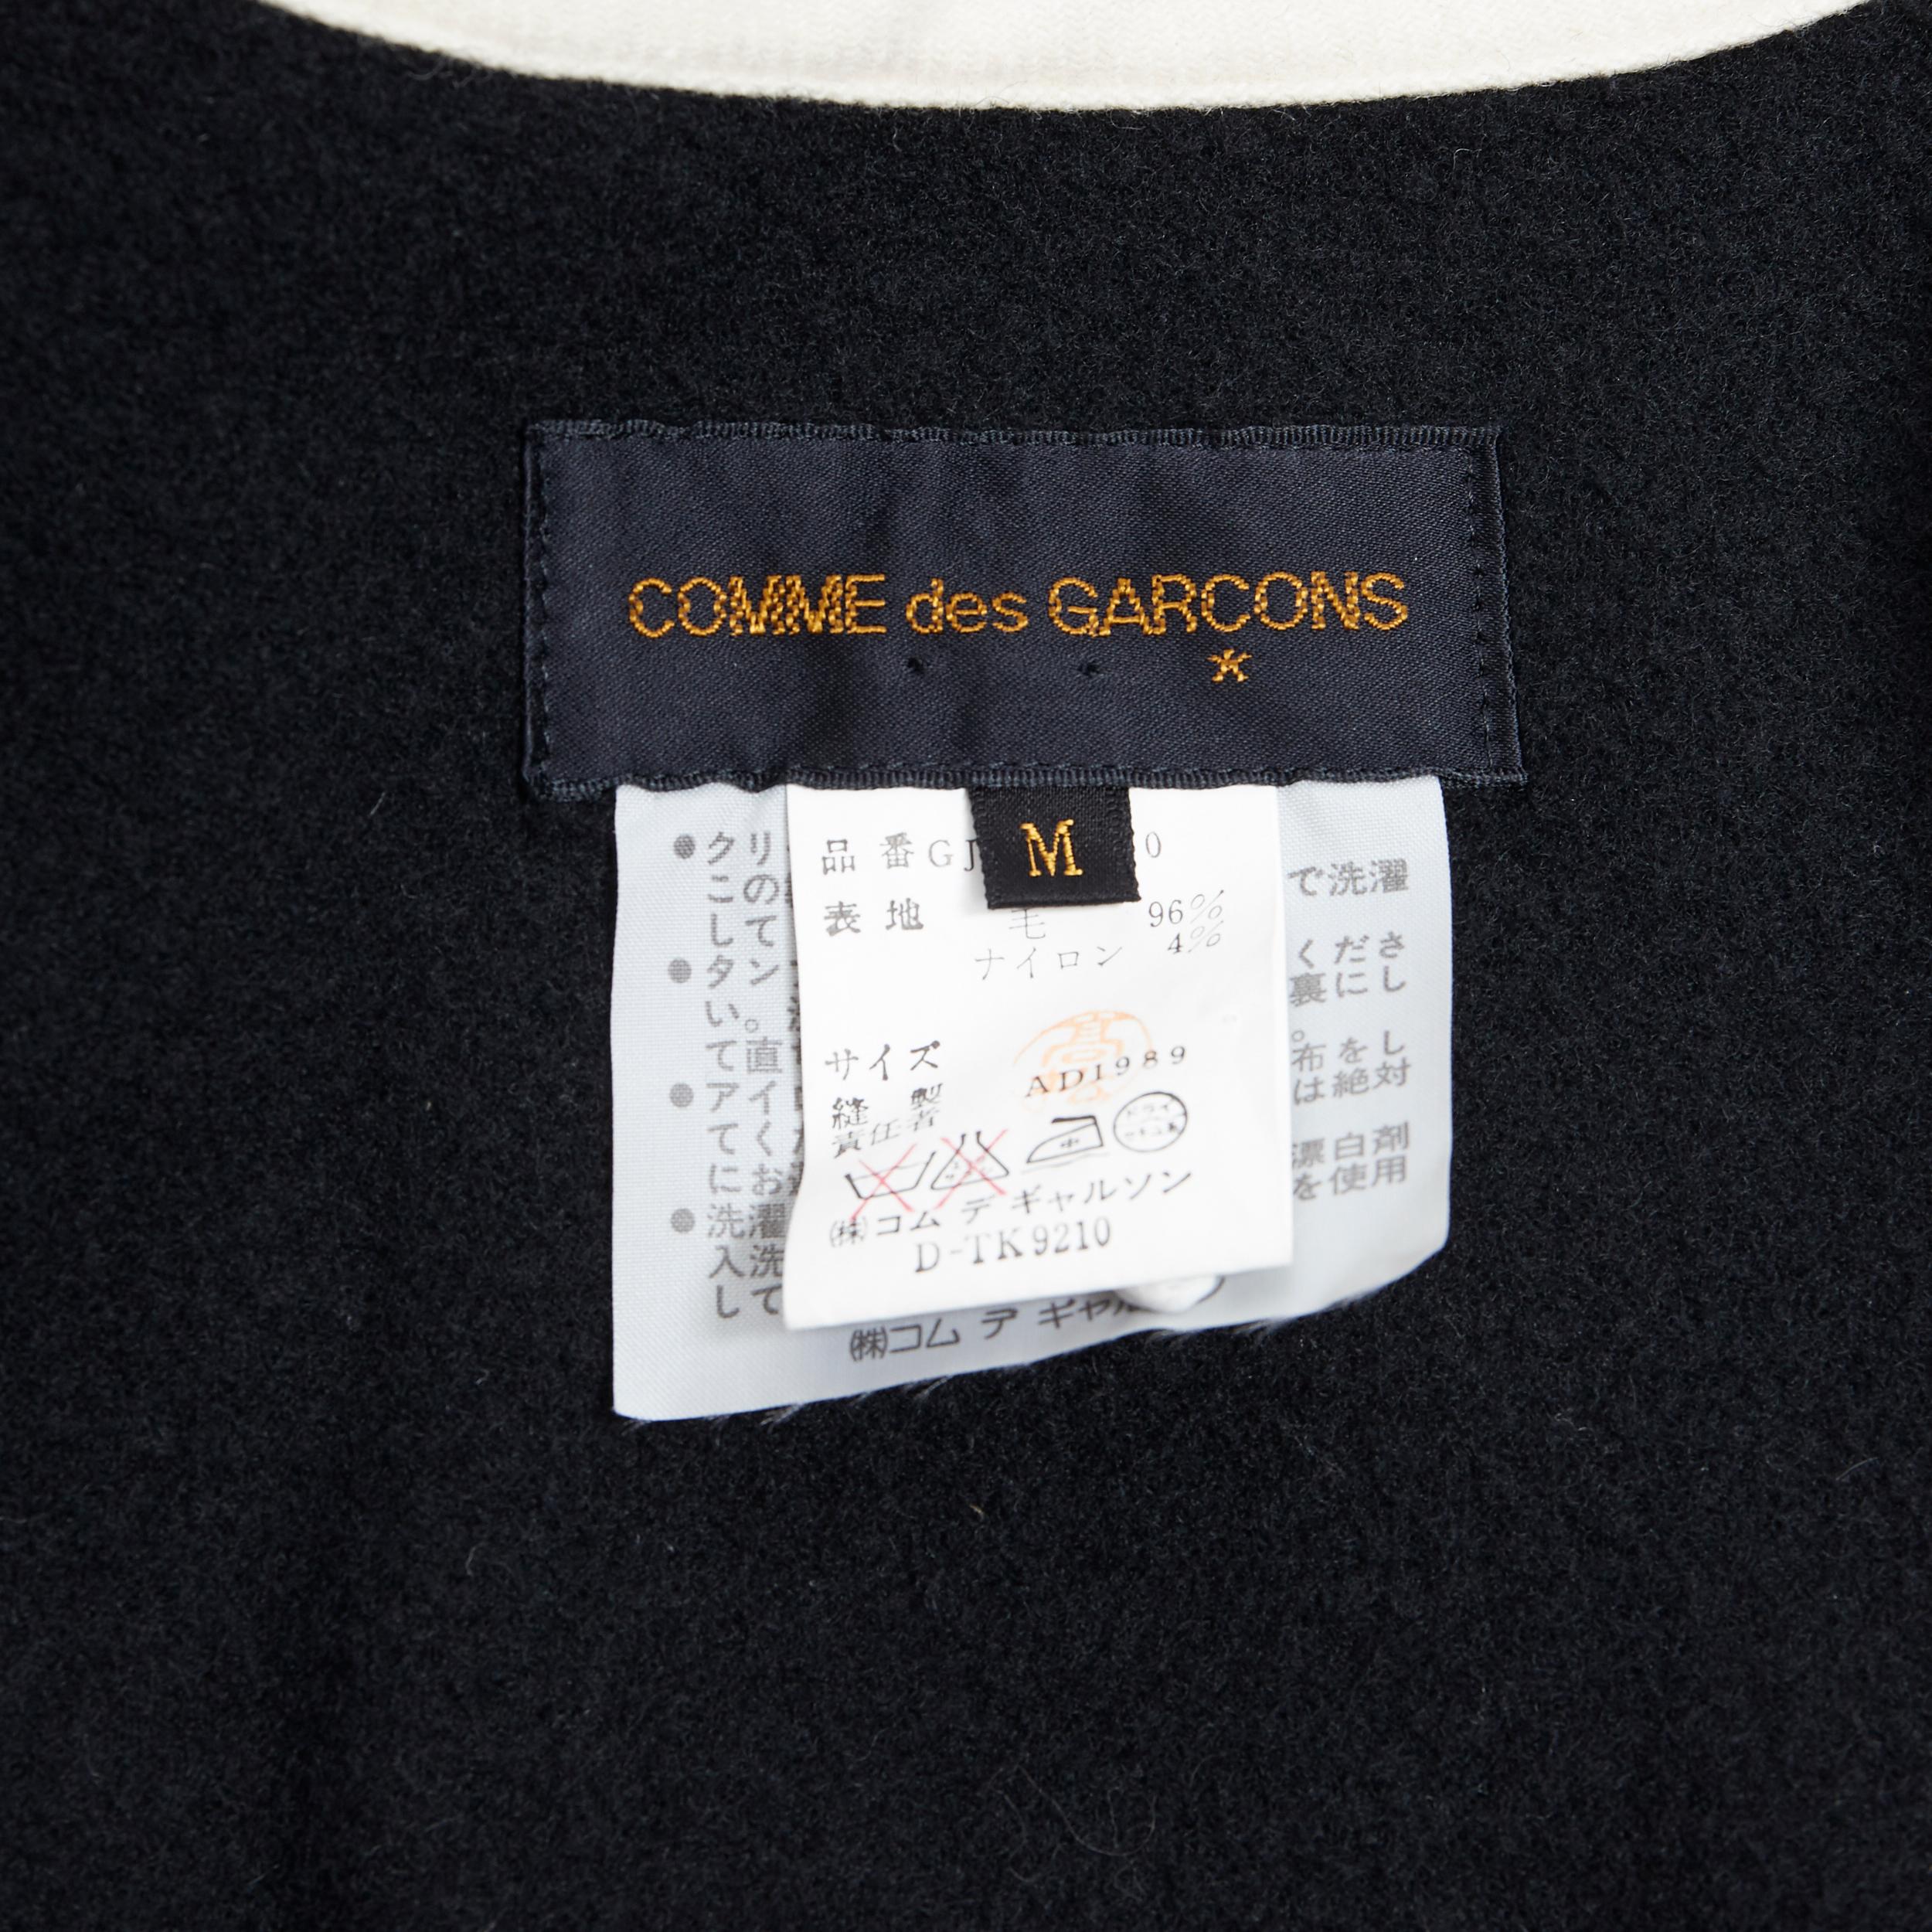 vintage COMME DES GARCONS 1989 Runway black white trimmed cape